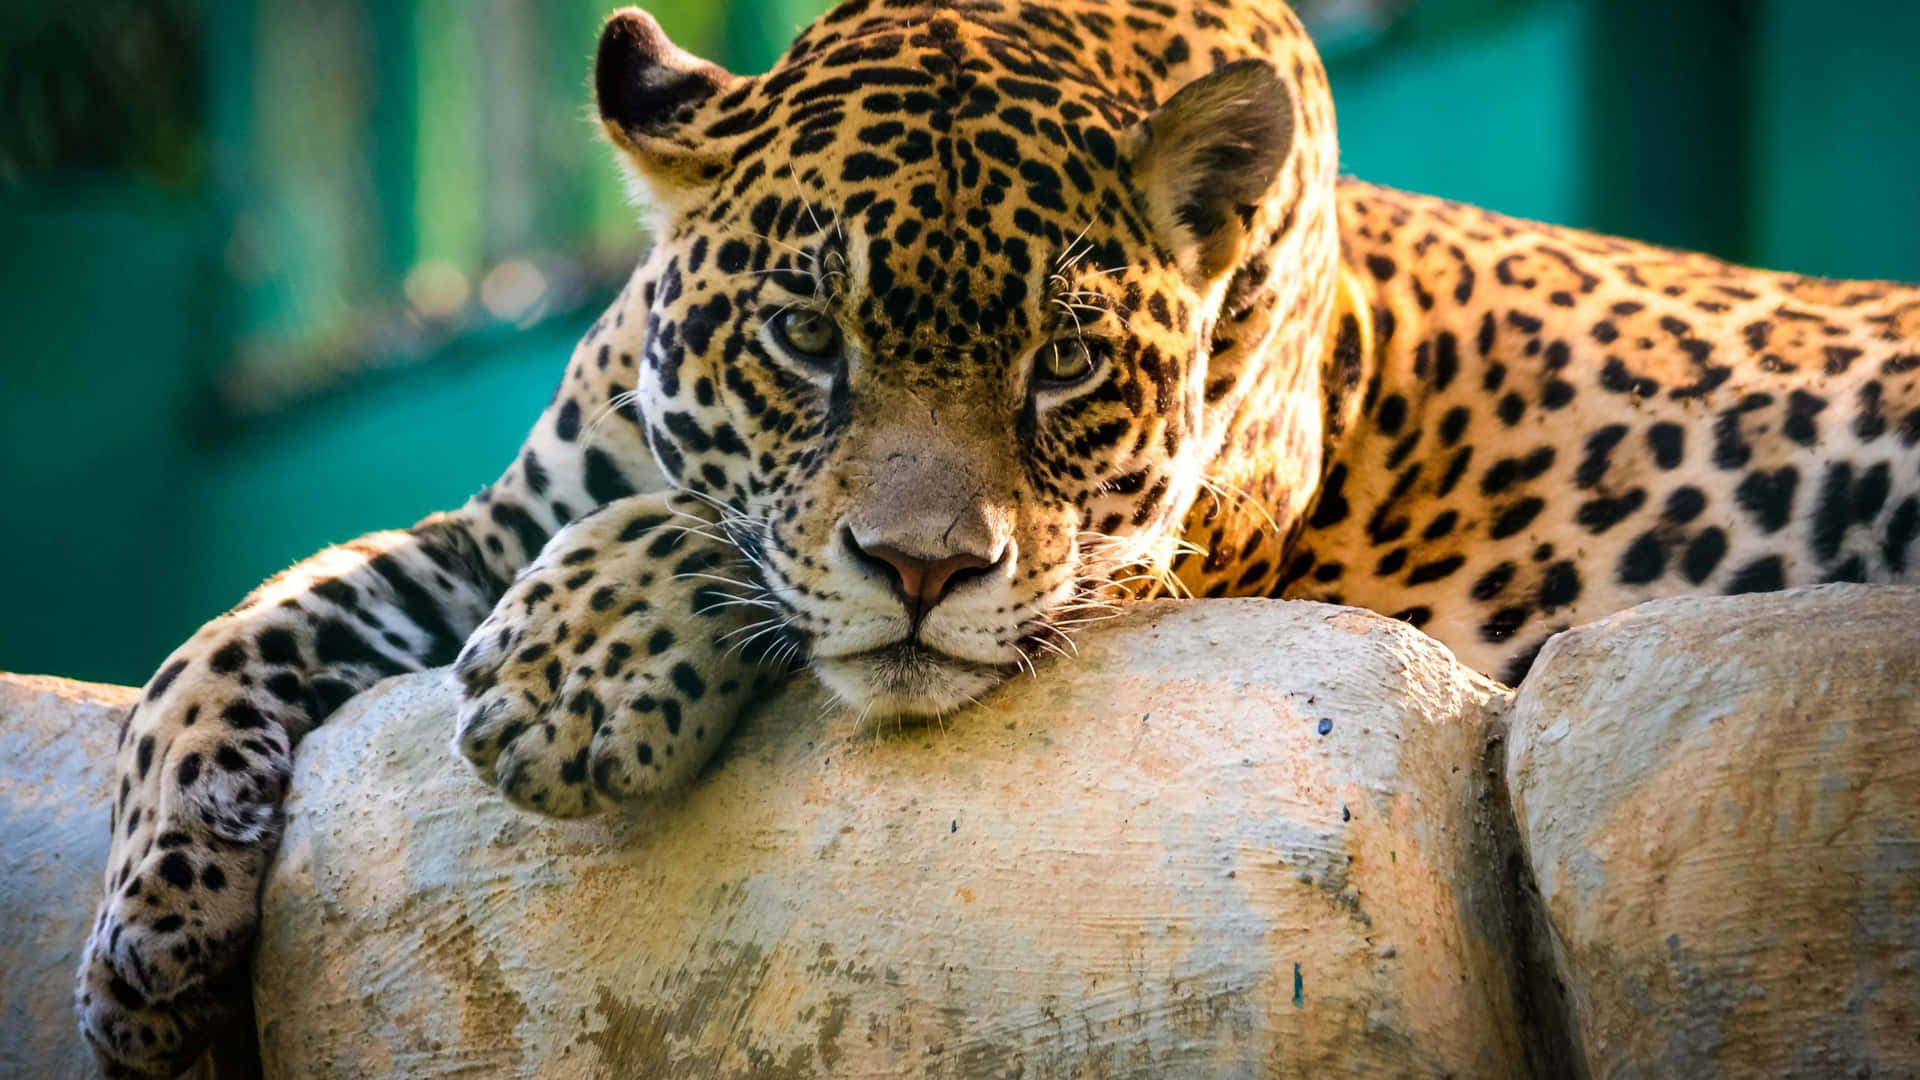 Jaguar Restingon Tree Trunk4 K Wildlife Wallpaper